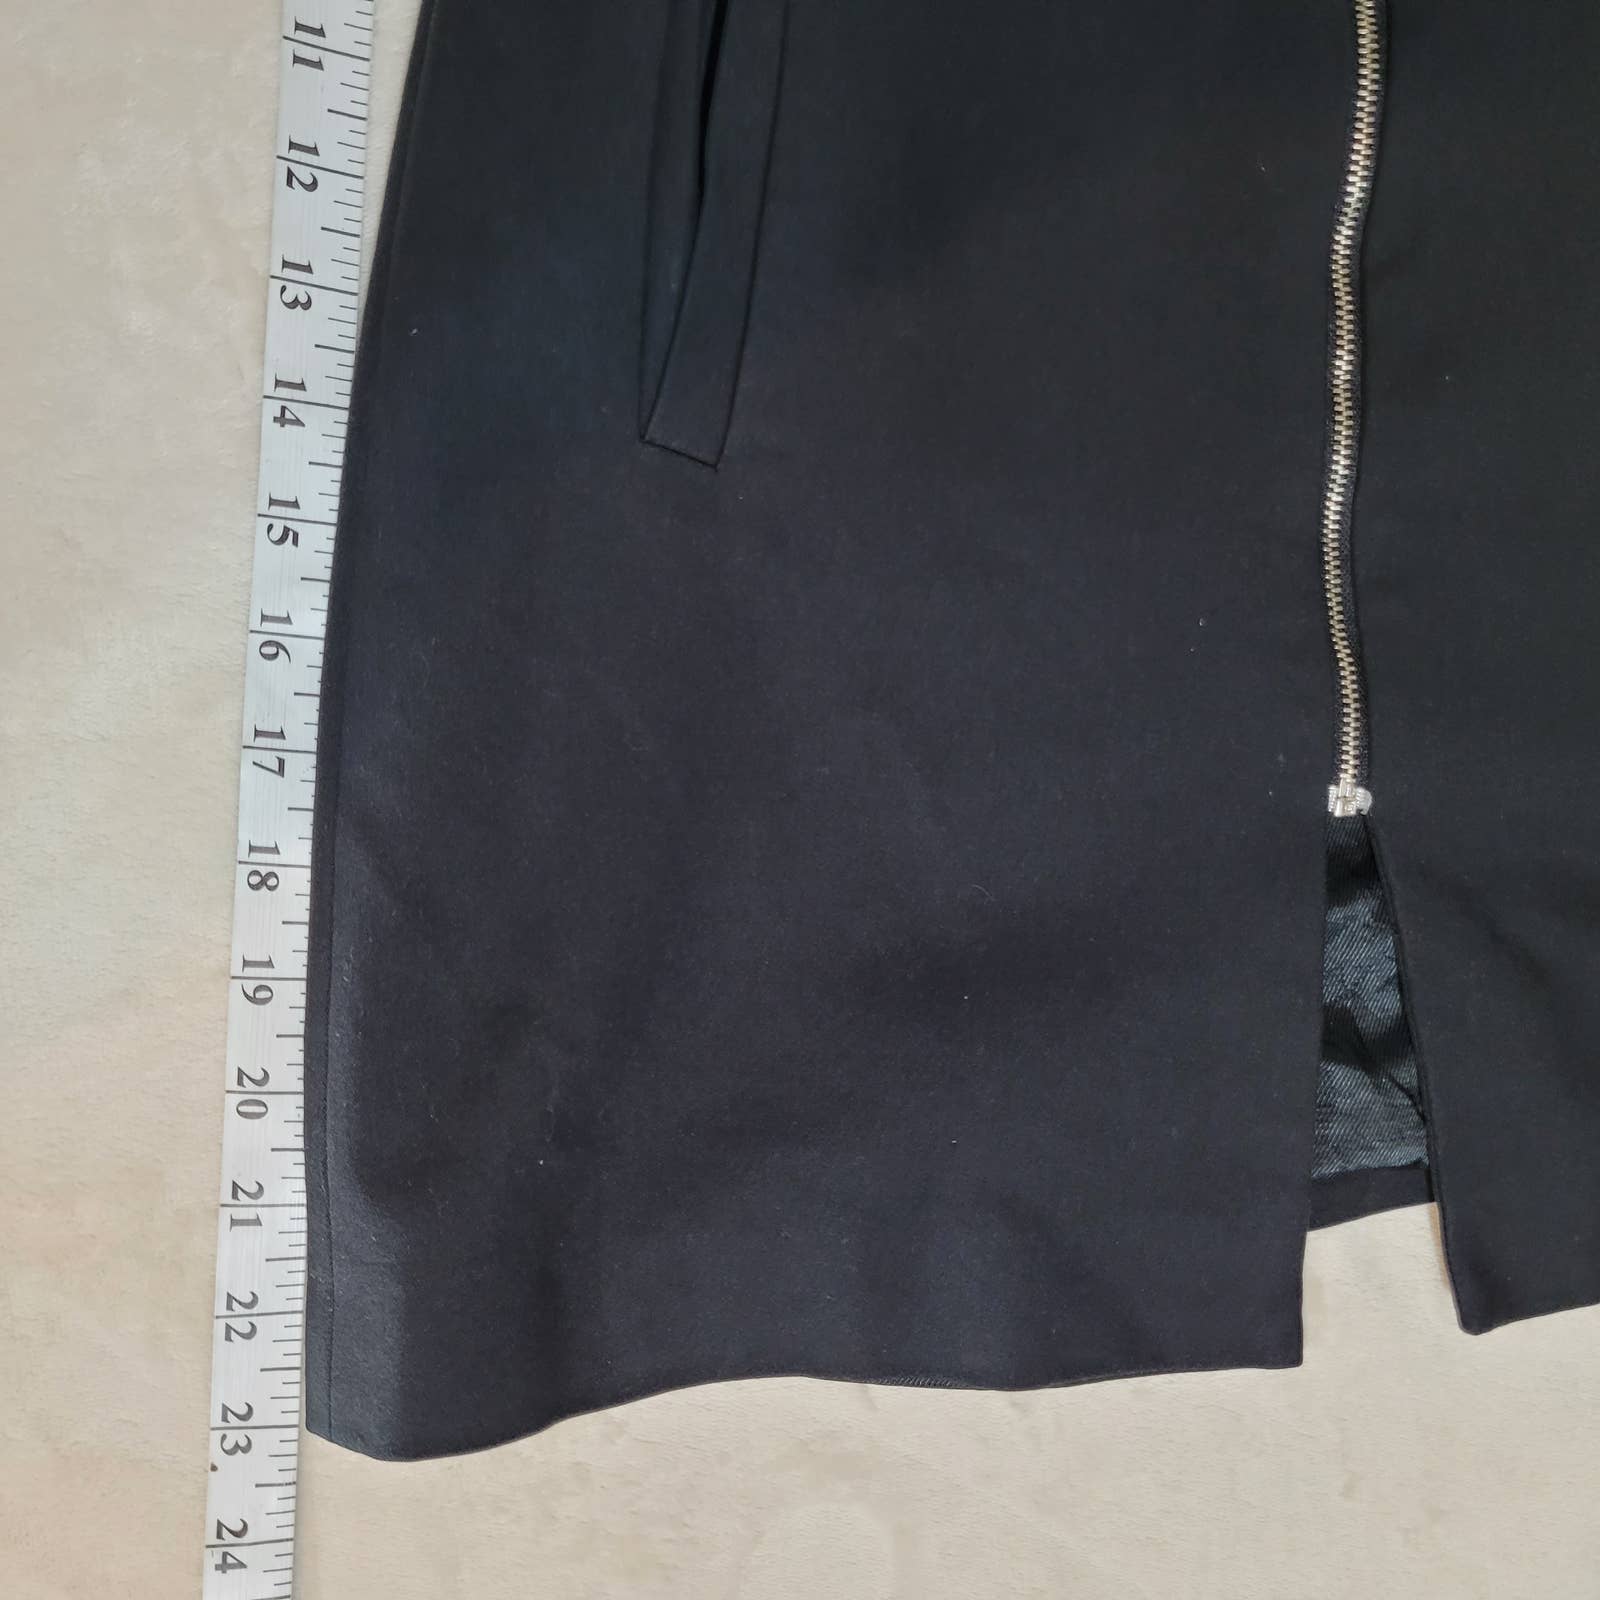 Zara Basics Collection Long Structured Black Zip Up Blazer - Size MediumMarkita's ClosetZARA